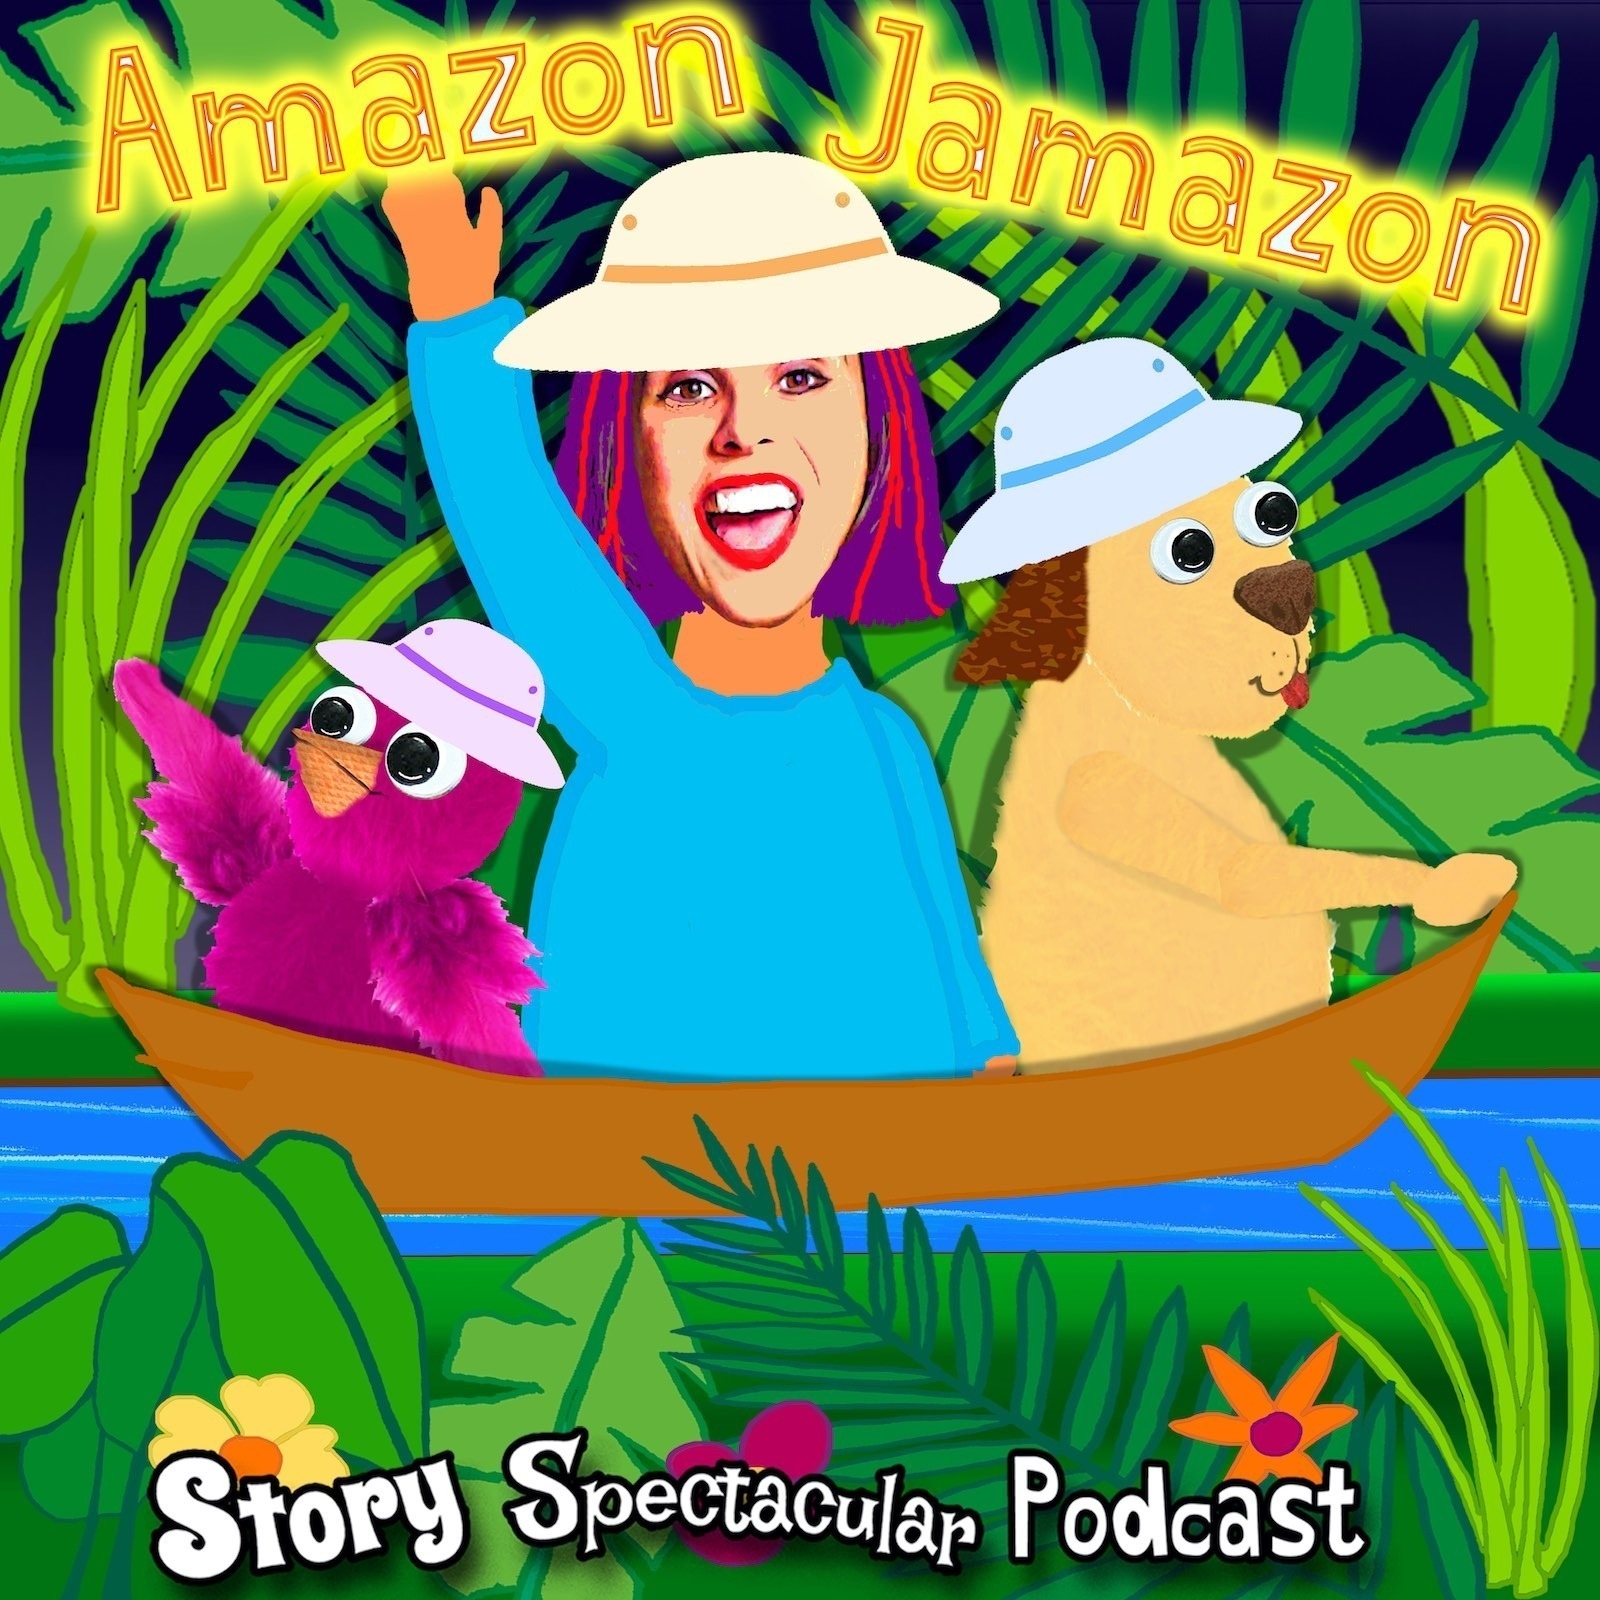 The Amazon Jamazon